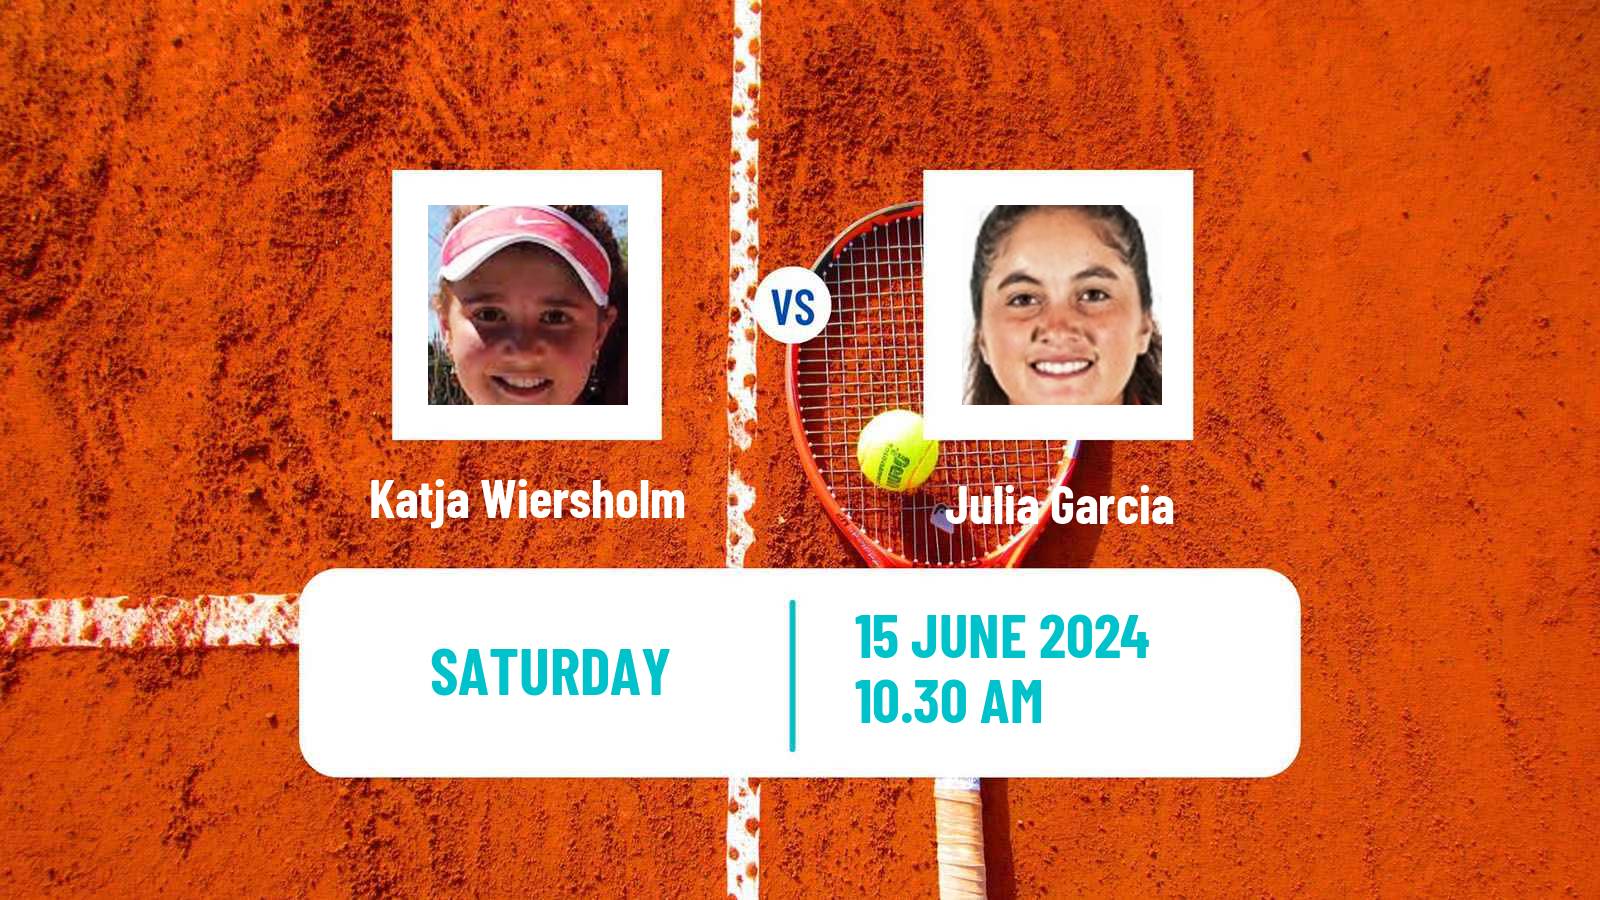 Tennis ITF W15 Santo Domingo 2 Women Katja Wiersholm - Julia Garcia